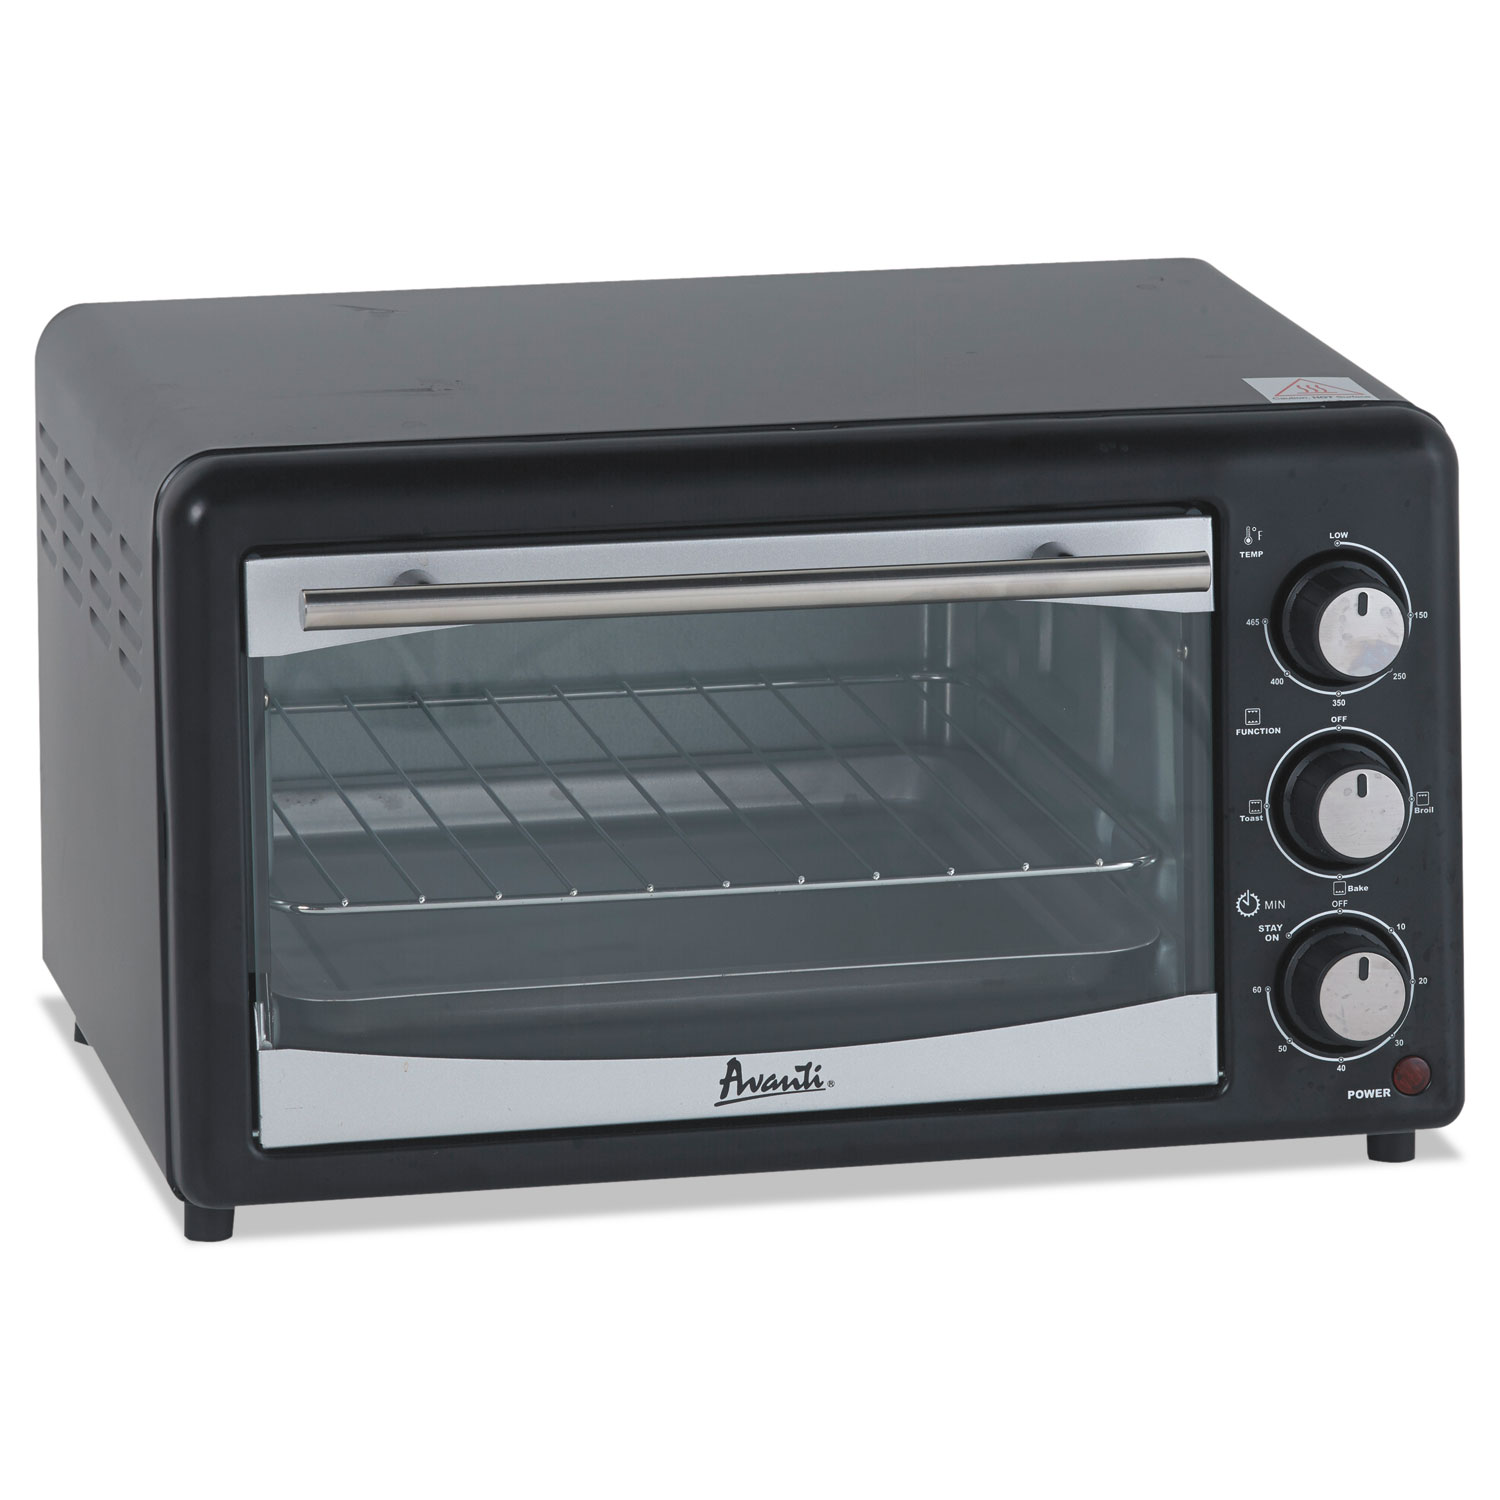  Avanti POW61B Toaster Oven, 4 Slice Capacity, Stainless Steel/Black (AVAPOW61B) 